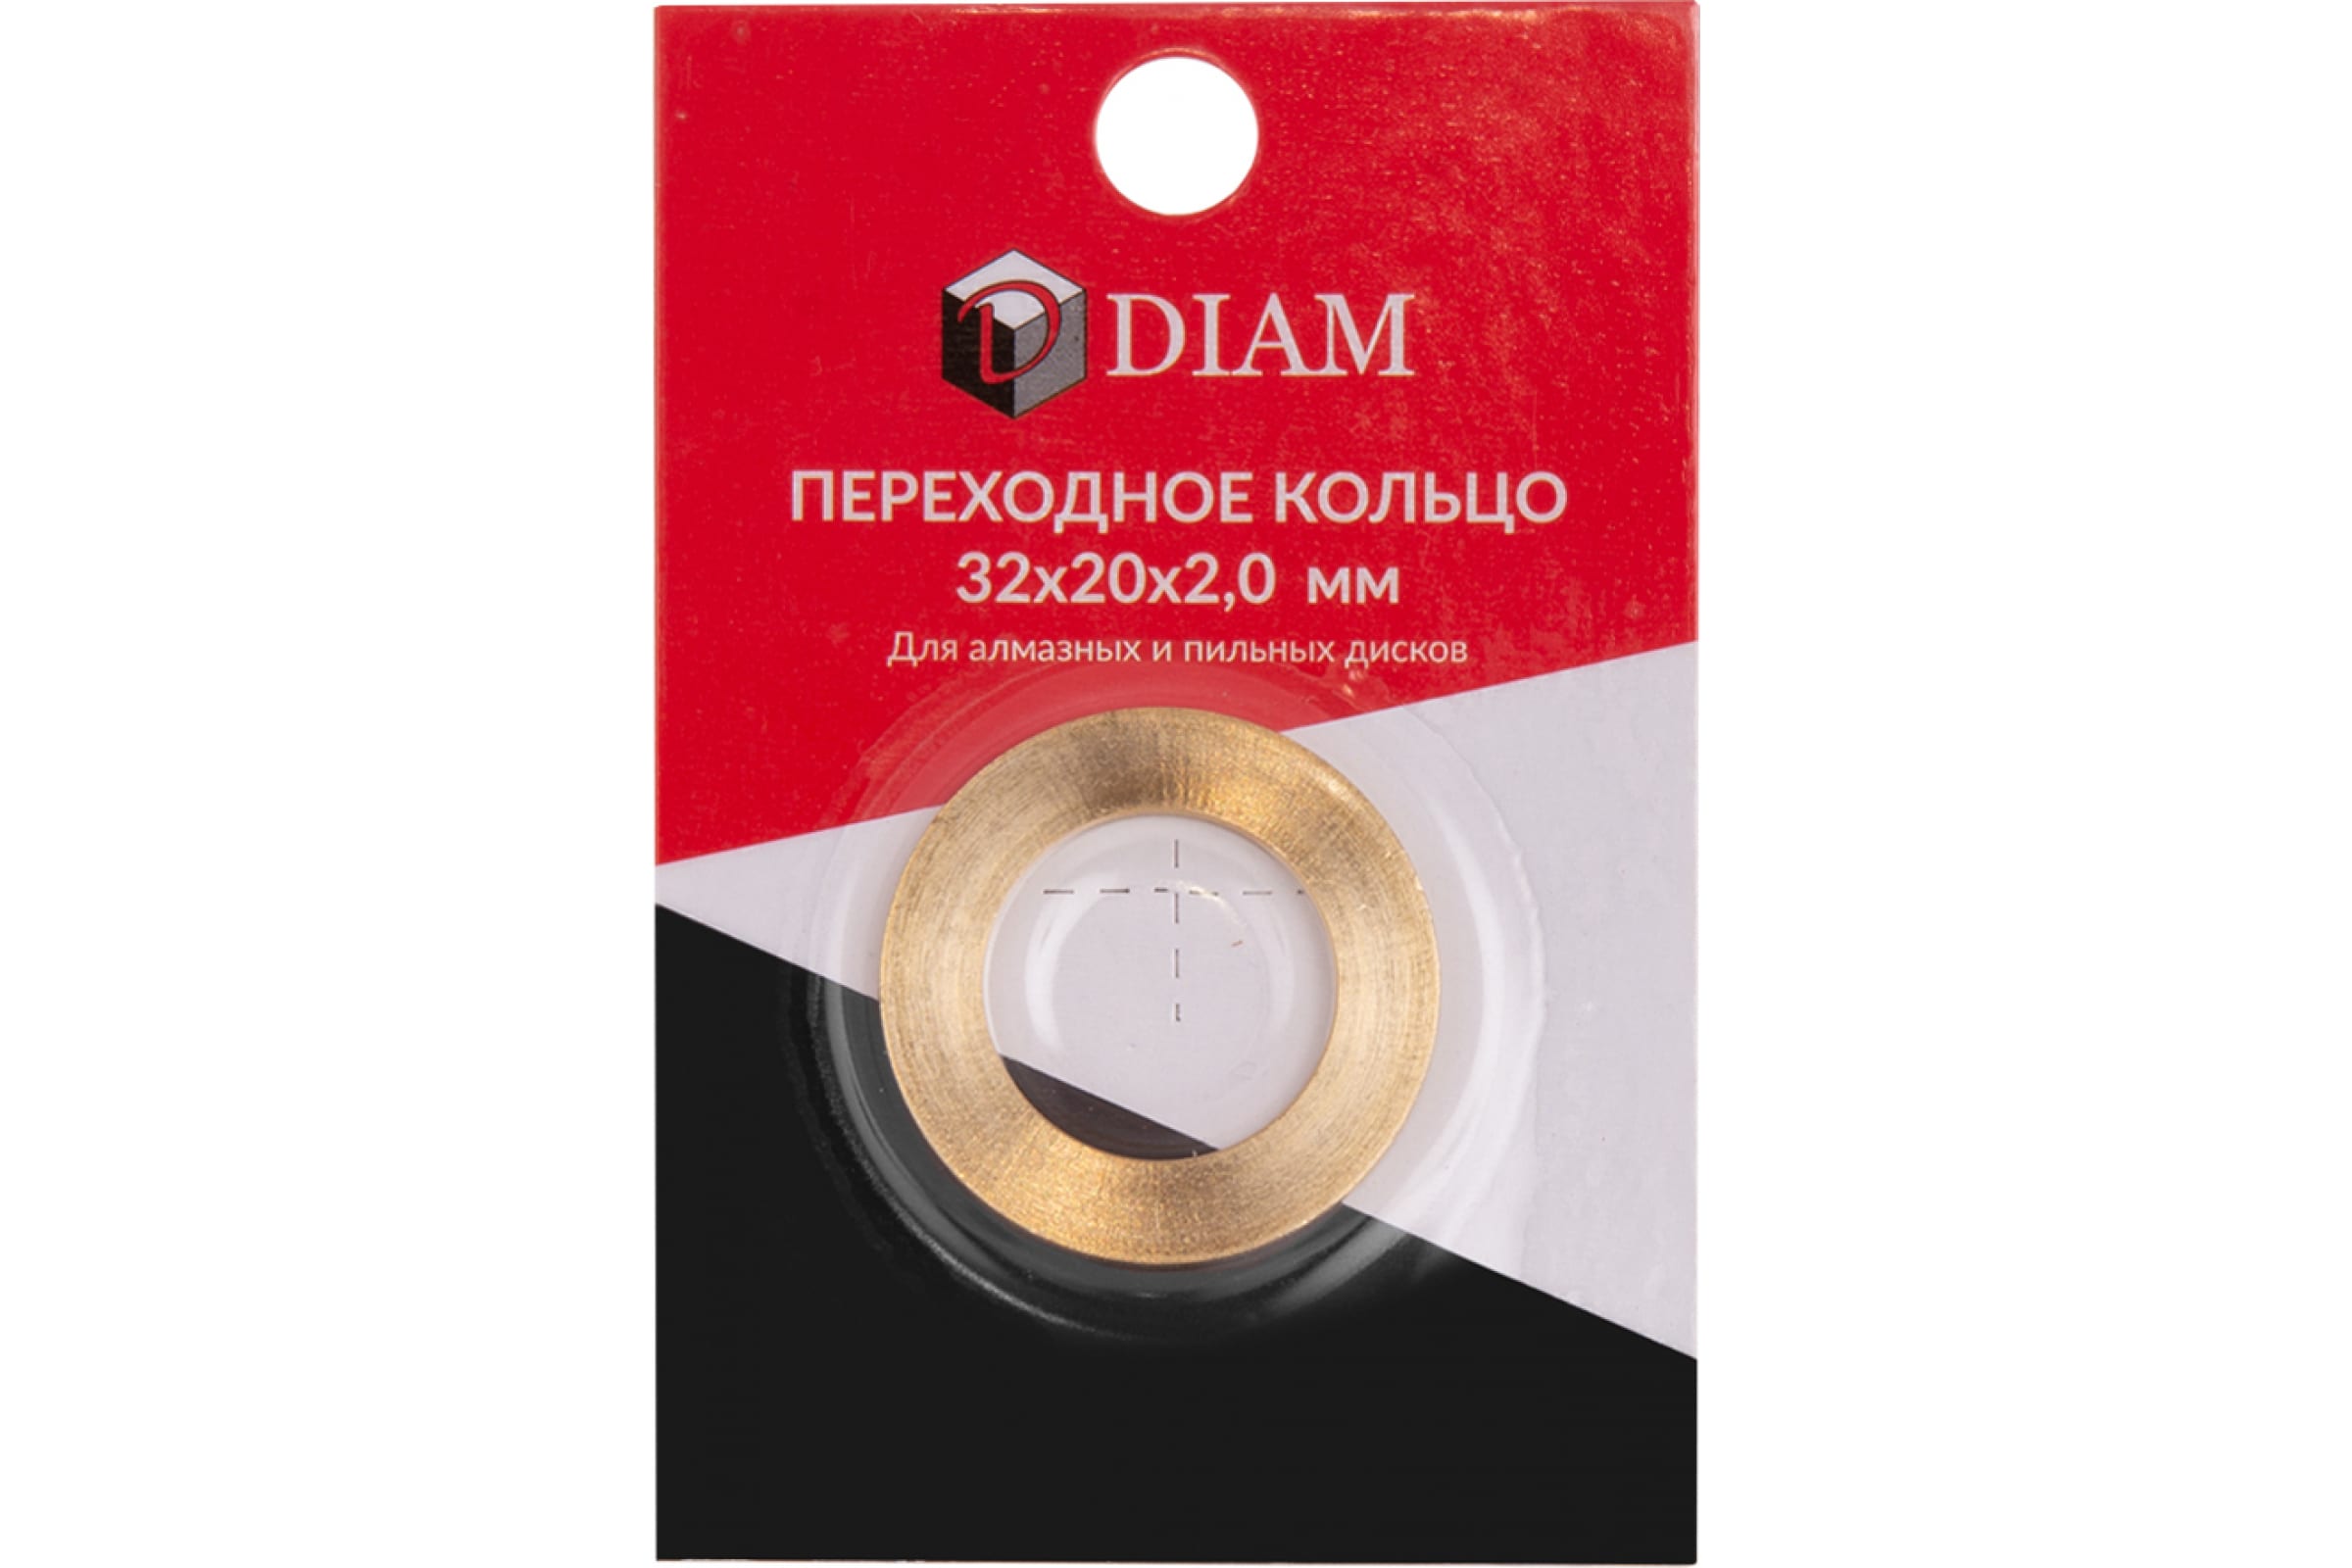 DIAM Переходное кольцо 32х20х2,0 640085 кольцо переходное trio diamond